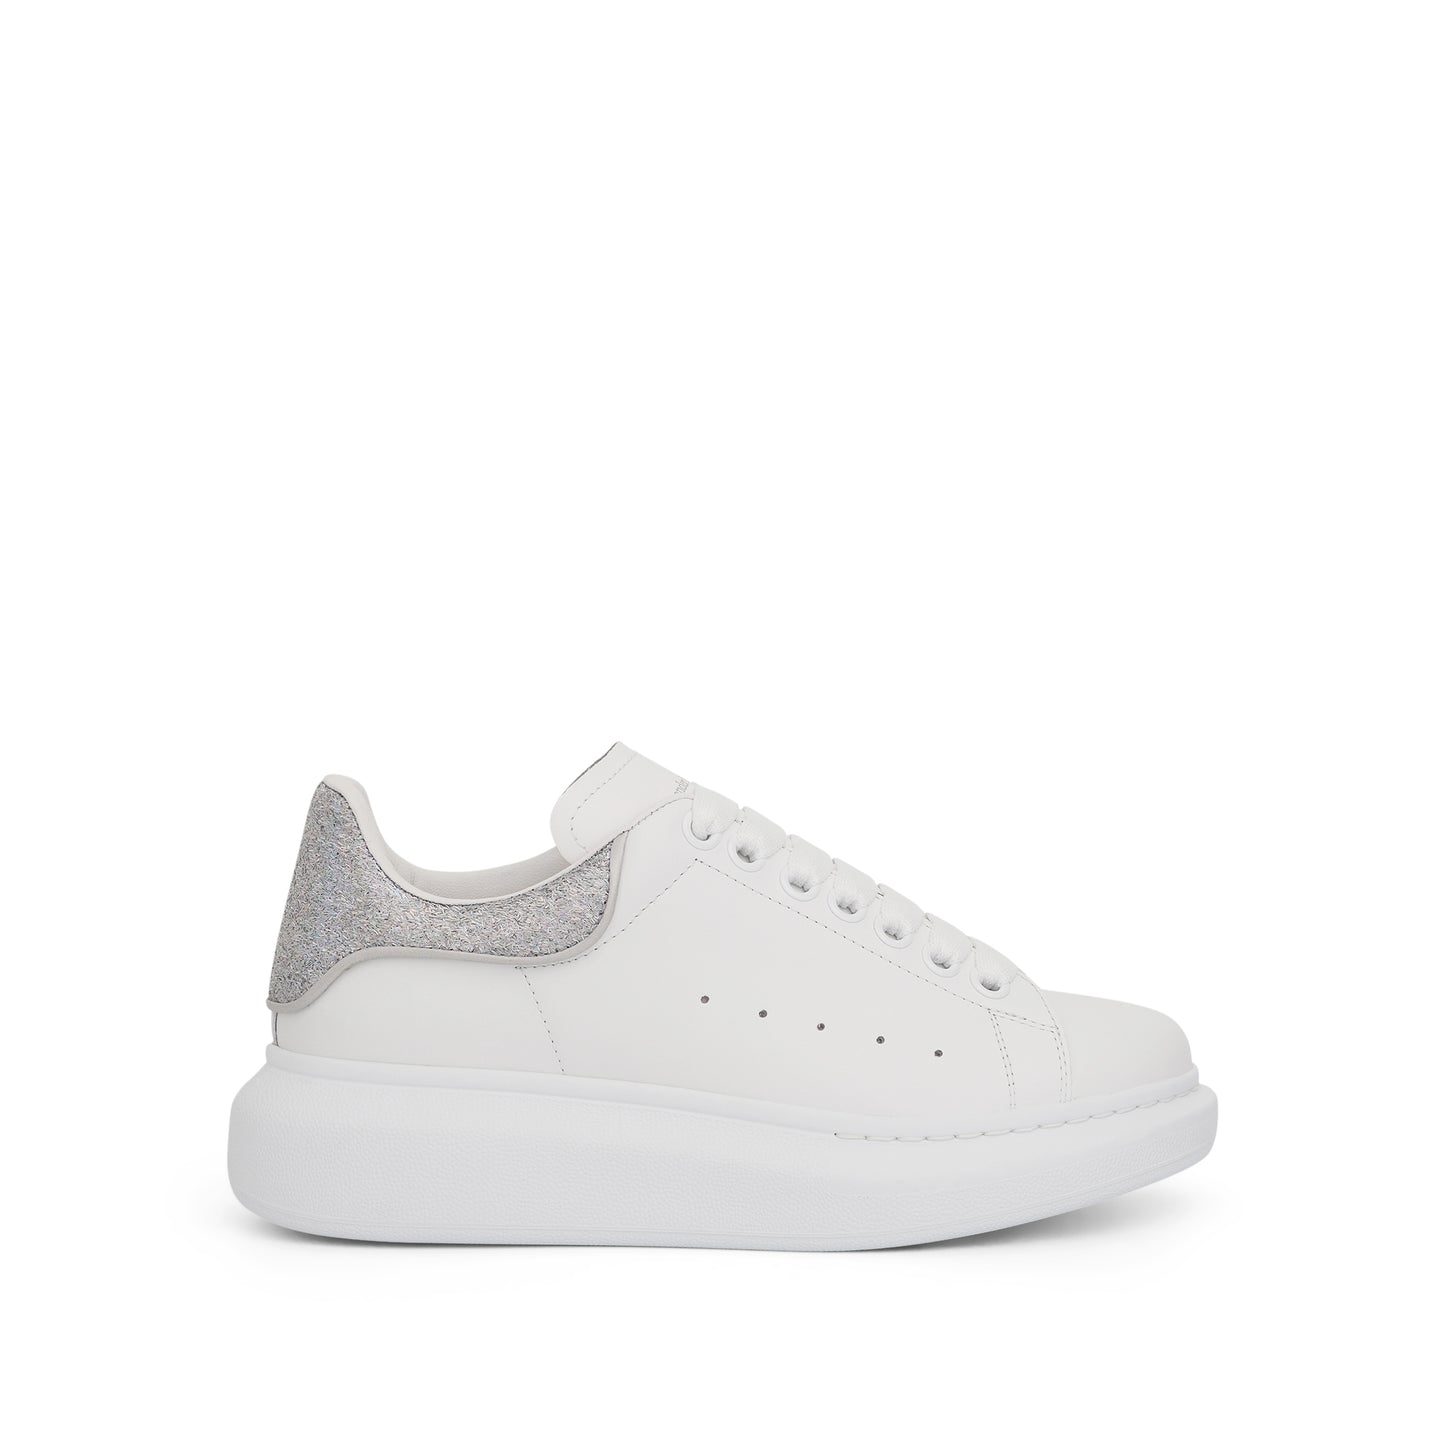 Larry Oversized Glitter Heel Sneaker in White/Grey